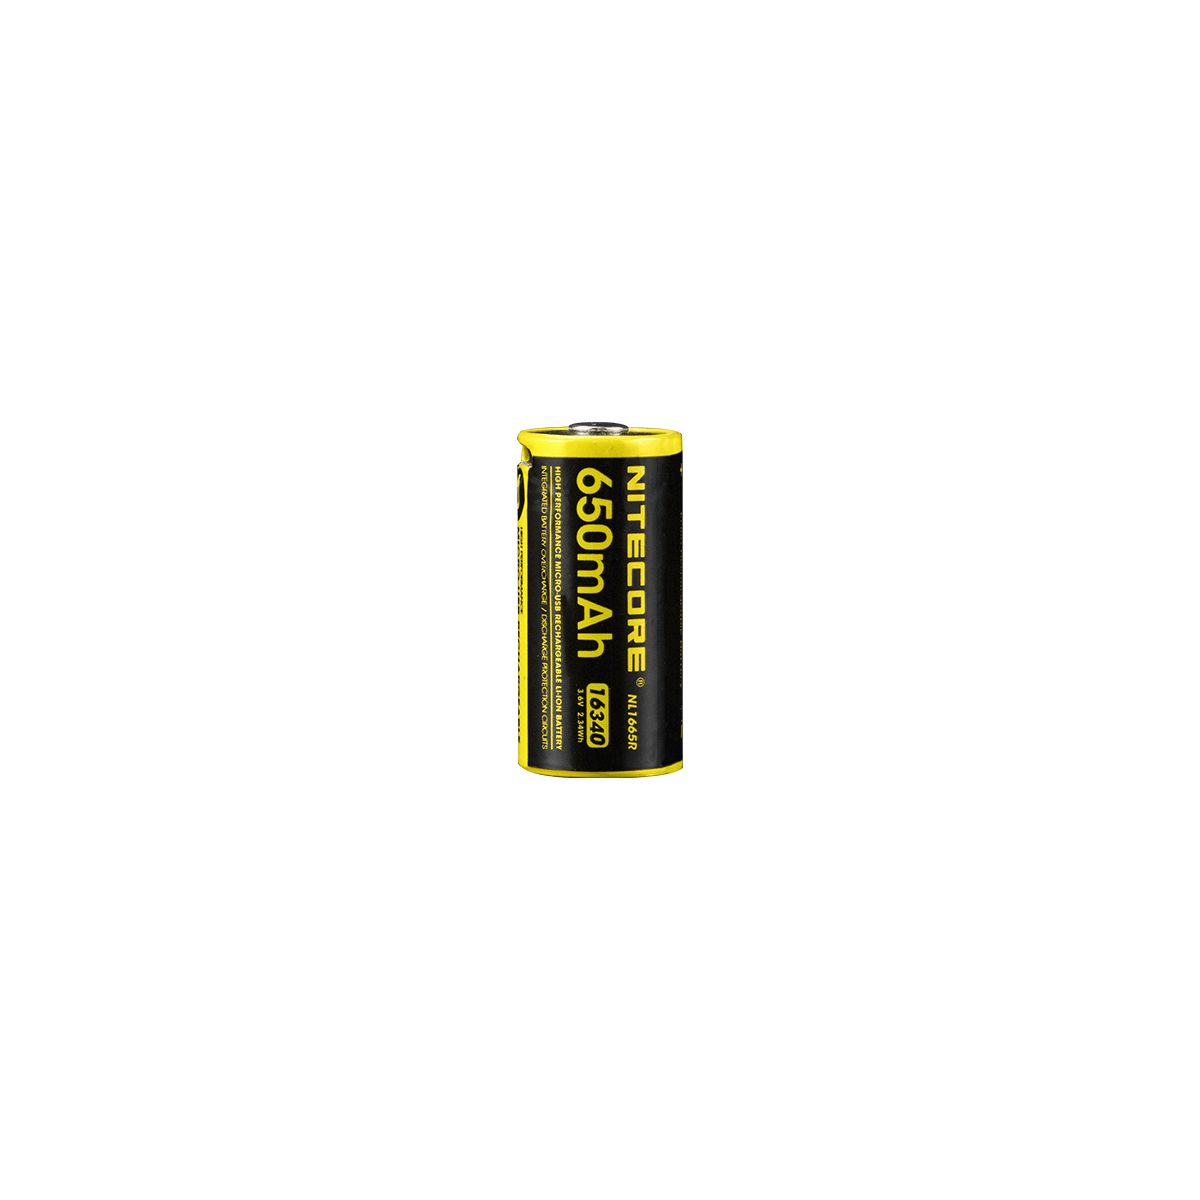 Dobíjecí baterie CR123 Nitecore 16340, Micro USB, 650 mAh